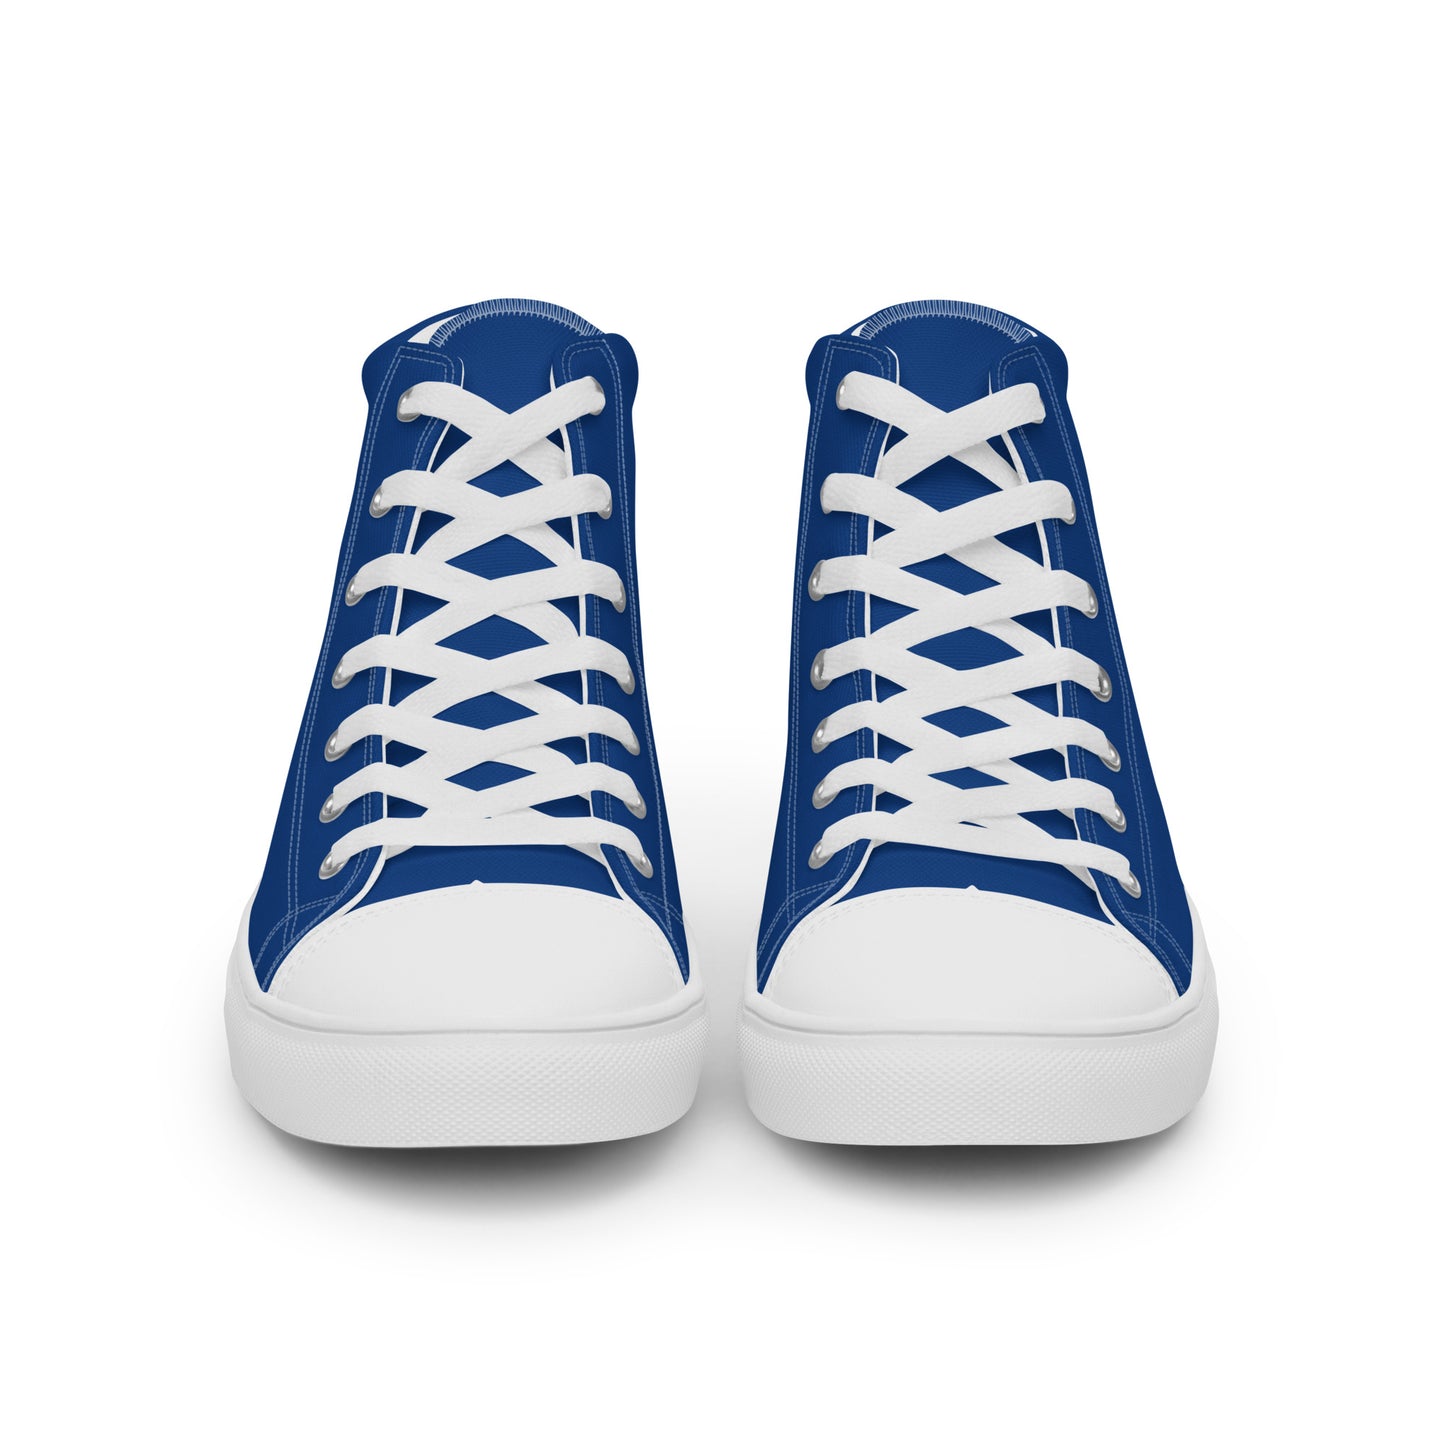 Costa Rica - Men - Blue - High top shoes